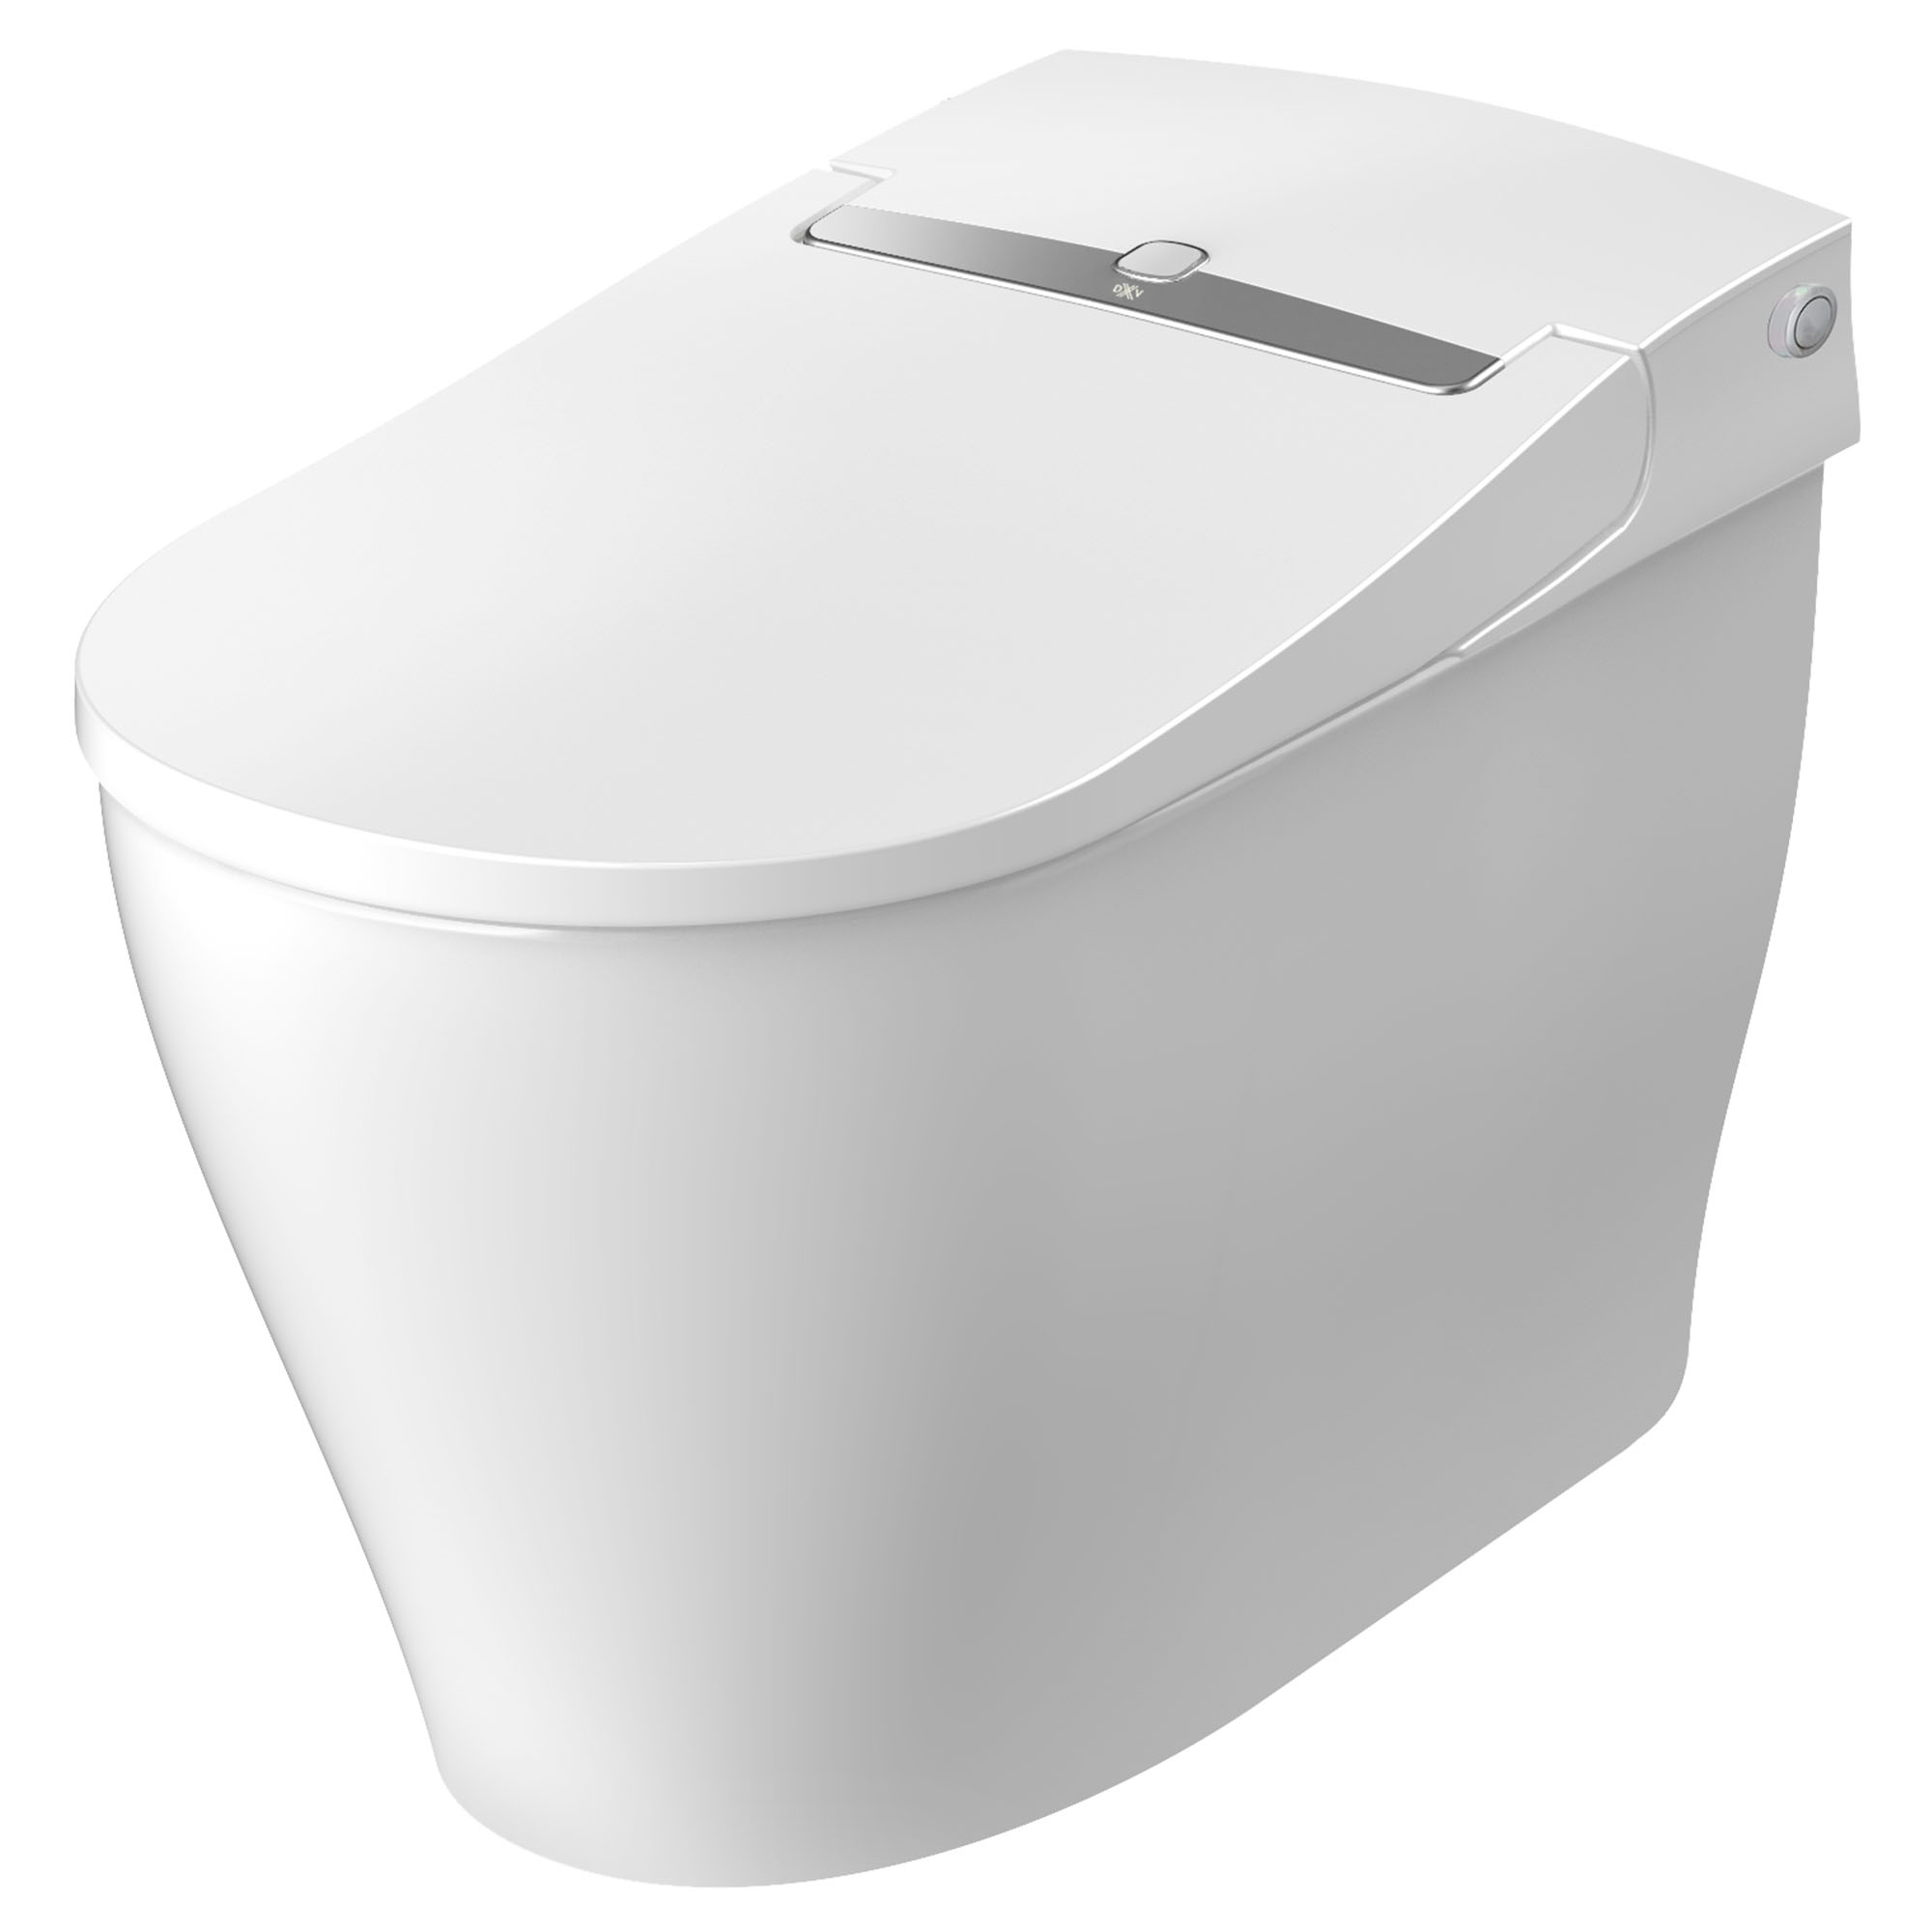 AT200®LS Dual Flush Elongated SpaLet® Bidet Toilet